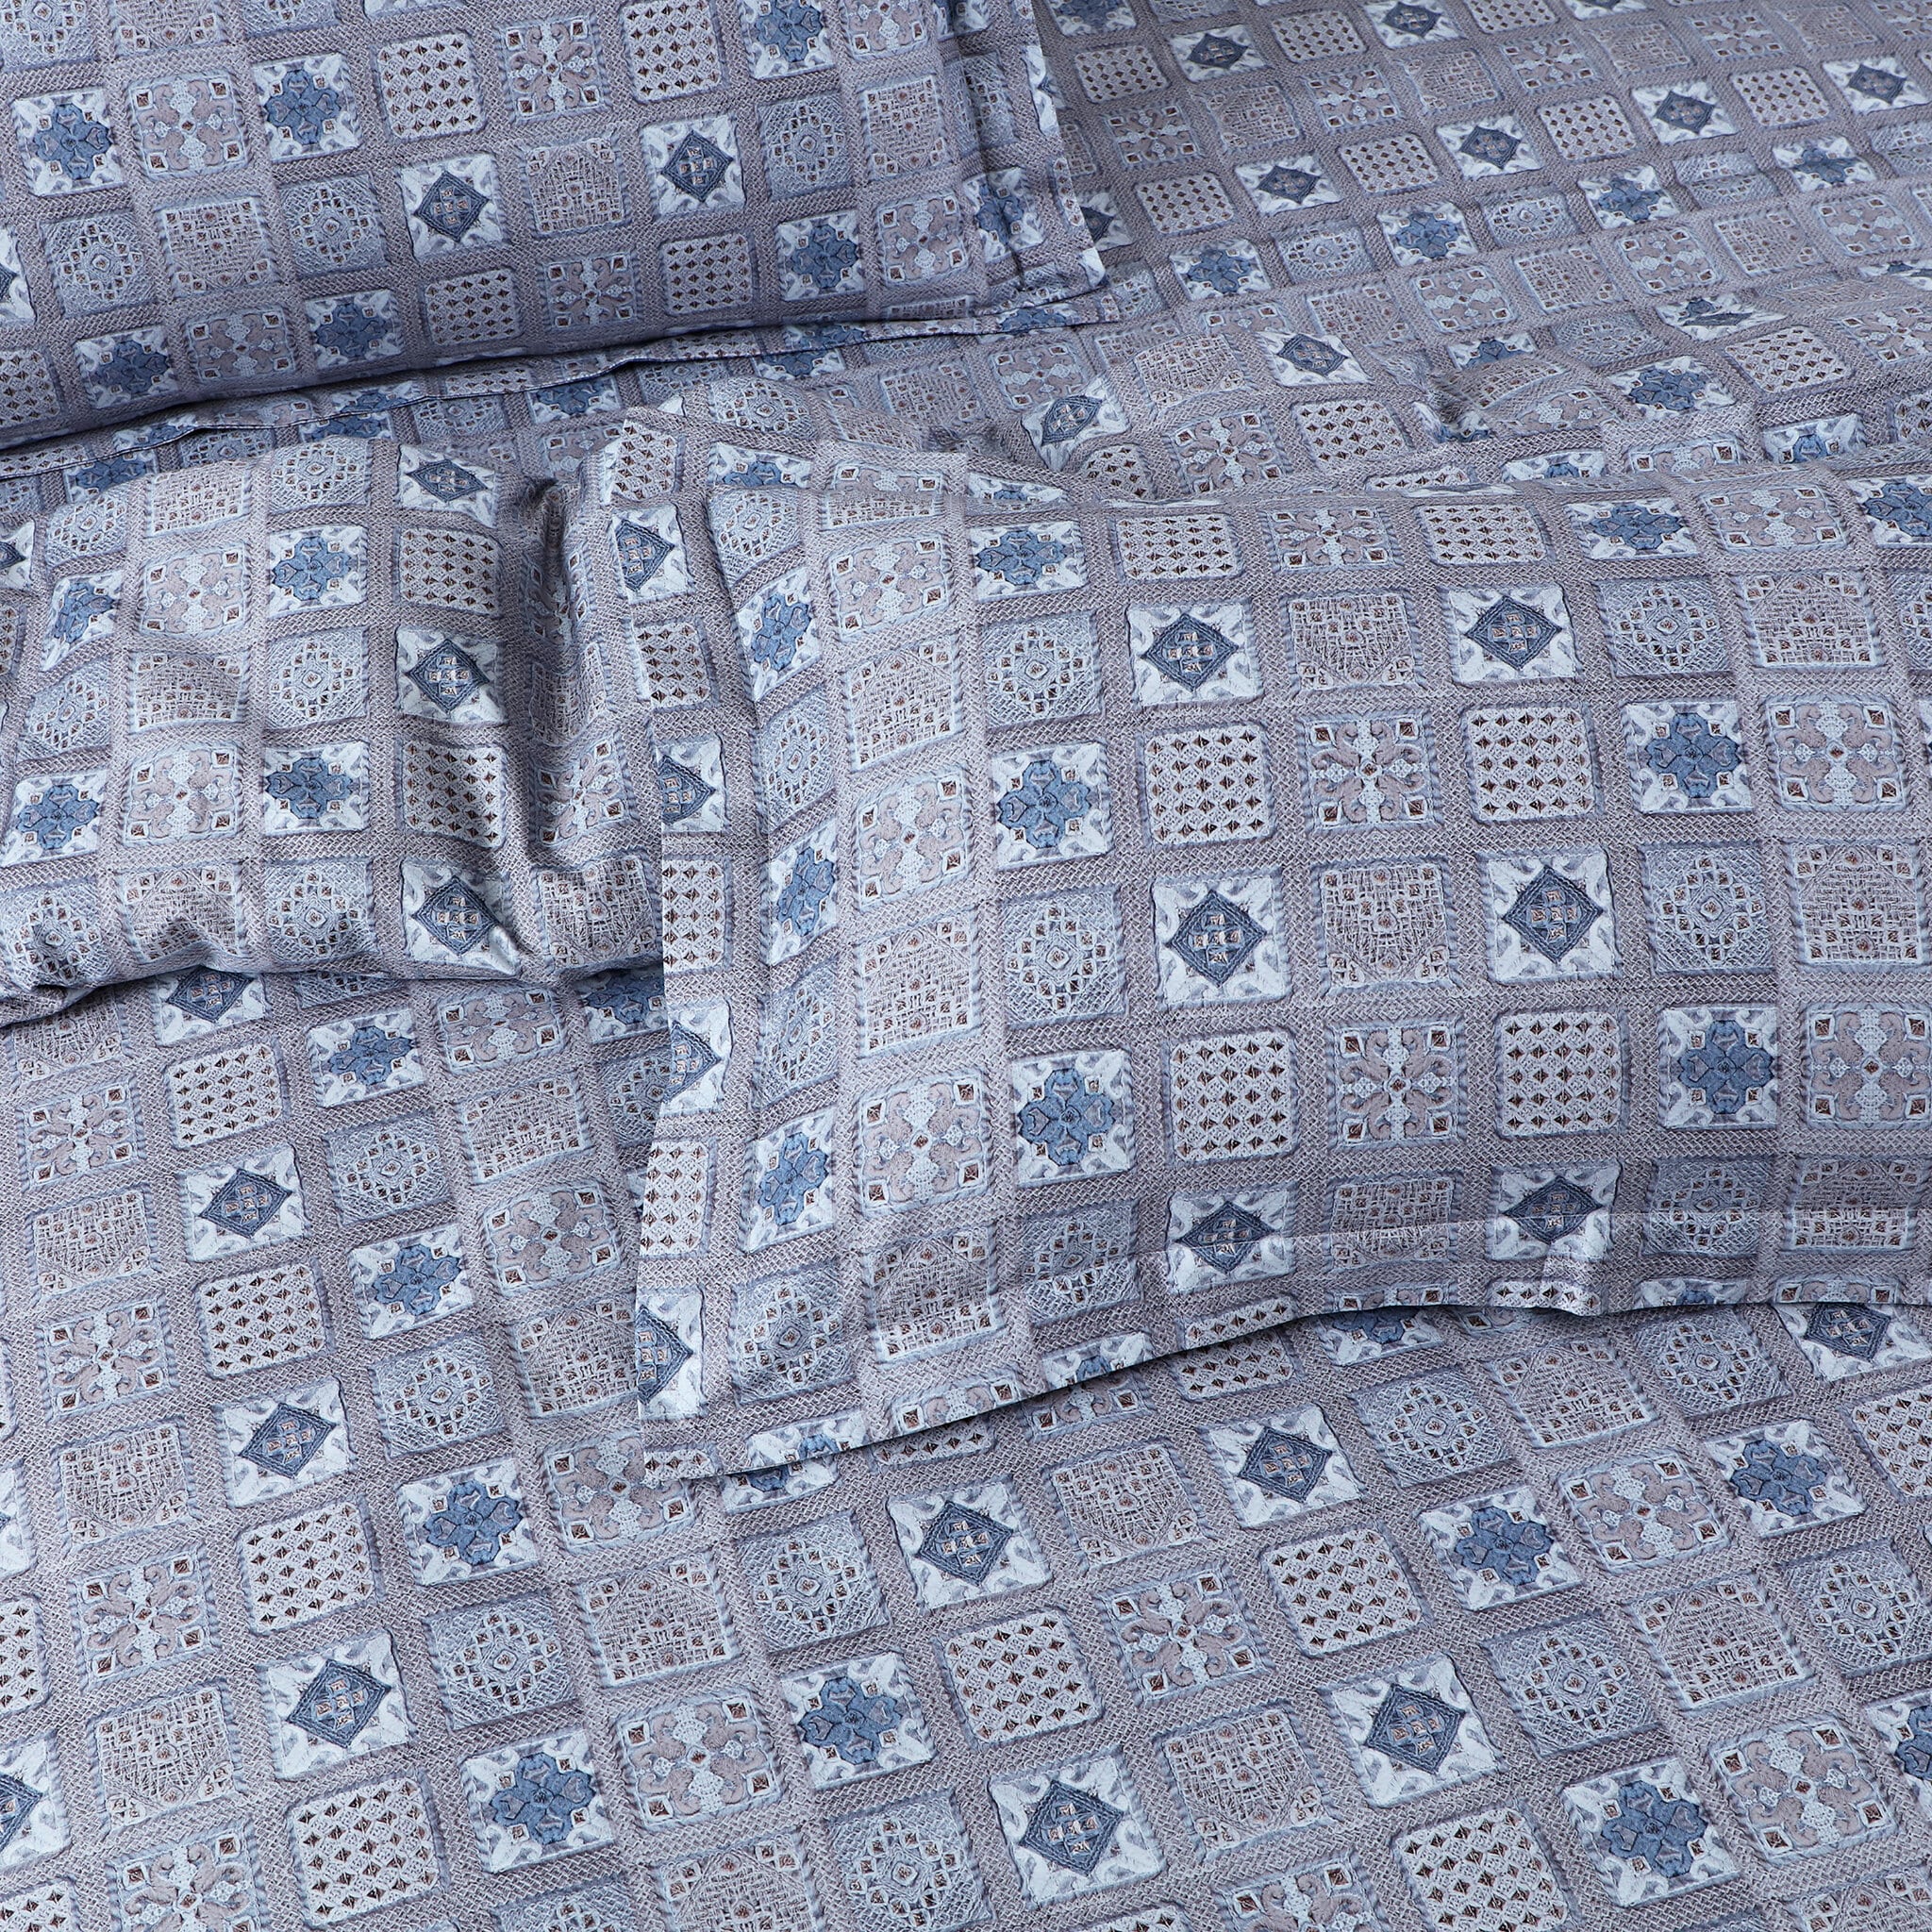 Malako Basel Grey Abstract 350 TC 100% Cotton King Size Bedsheet/Duvet Cover